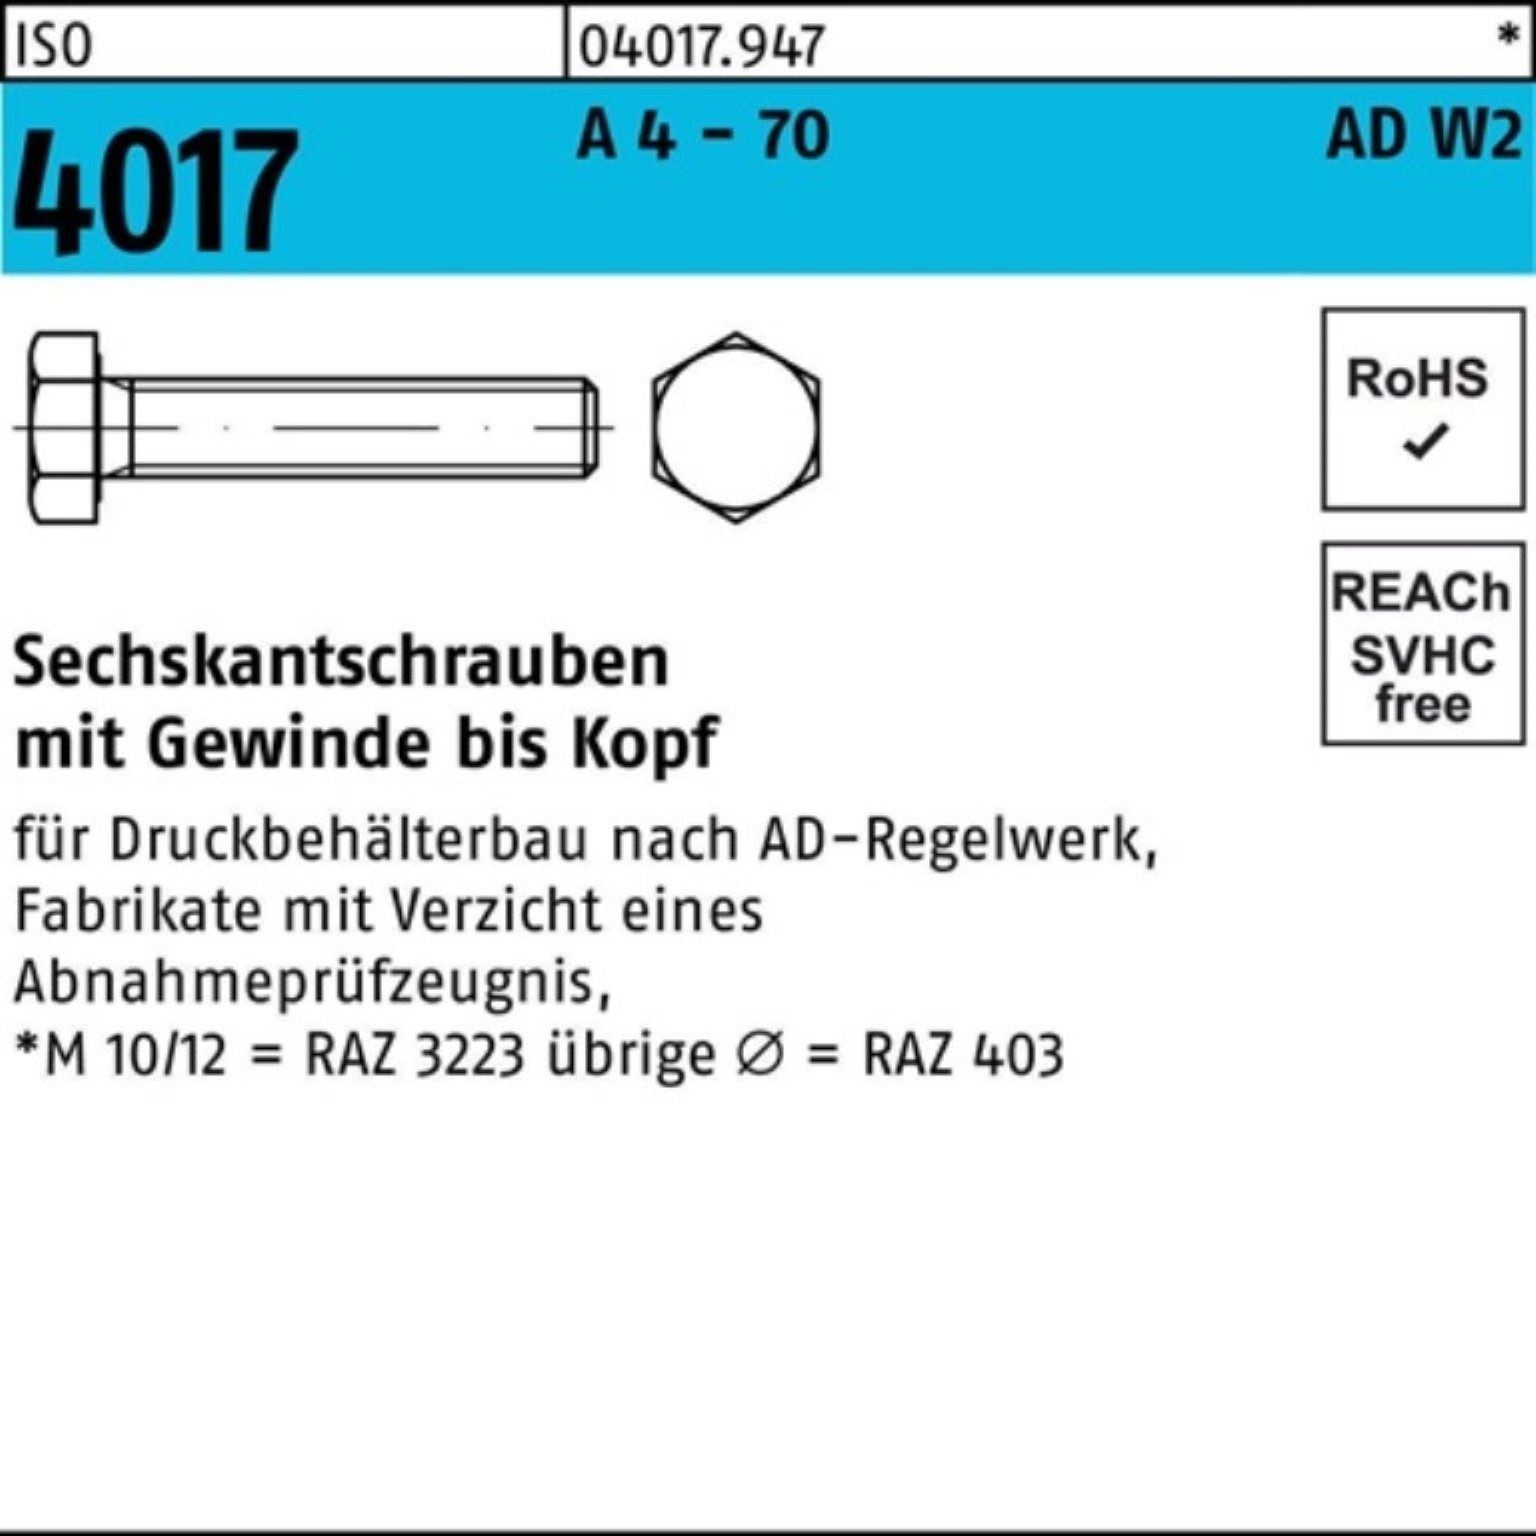 Bufab Sechskantschraube St 70 - M16x 4017 100er A 4 VG 25 Sechskantschraube Pack 75 AD-W2 ISO